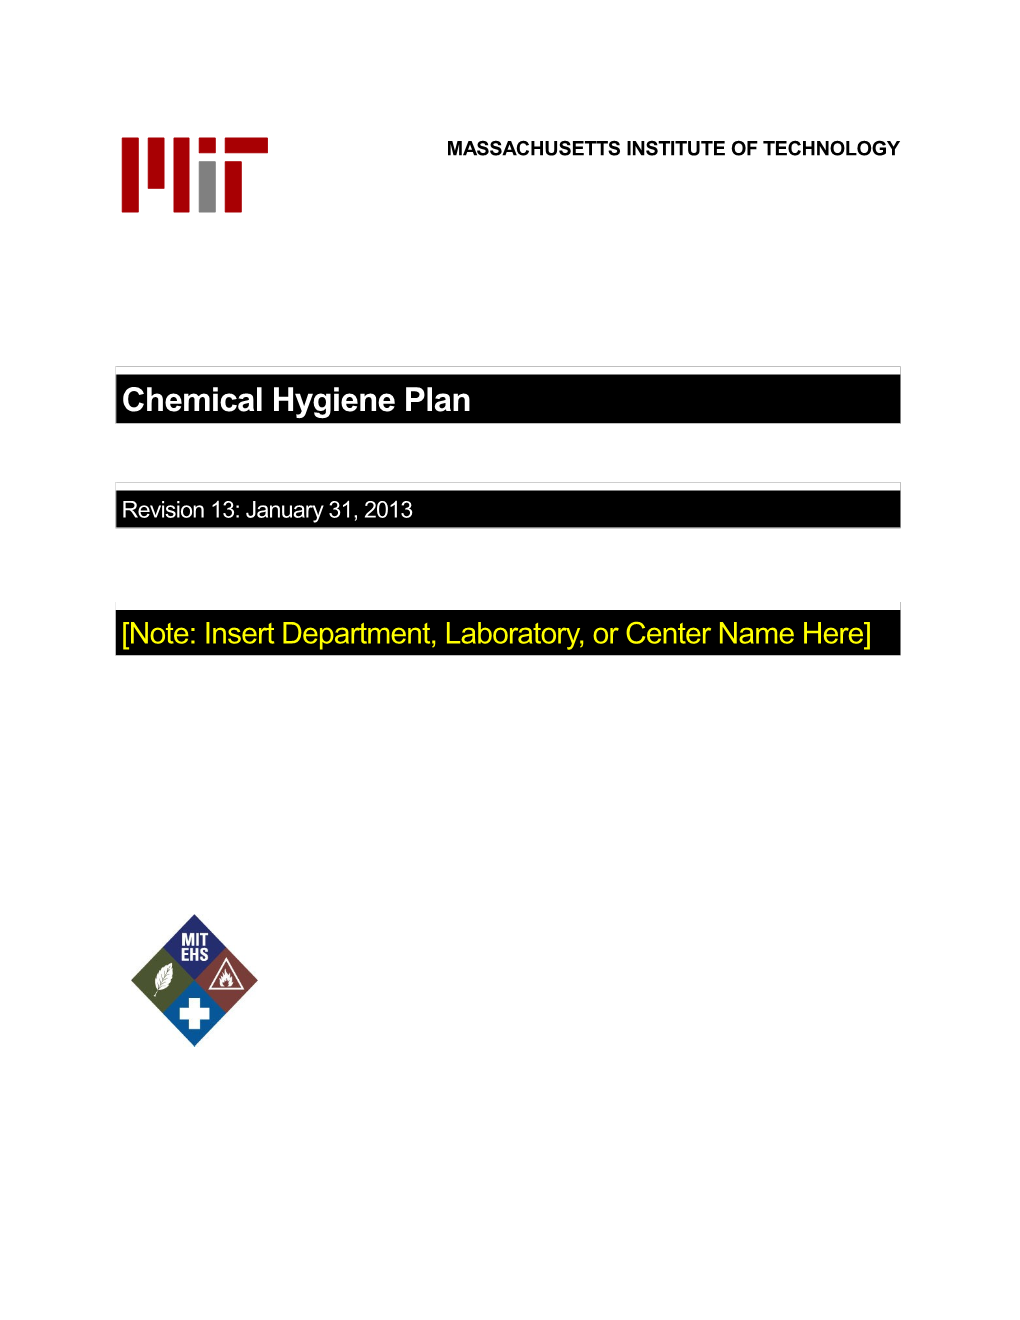 MIT Chemical Hygiene Plan Template V1-4